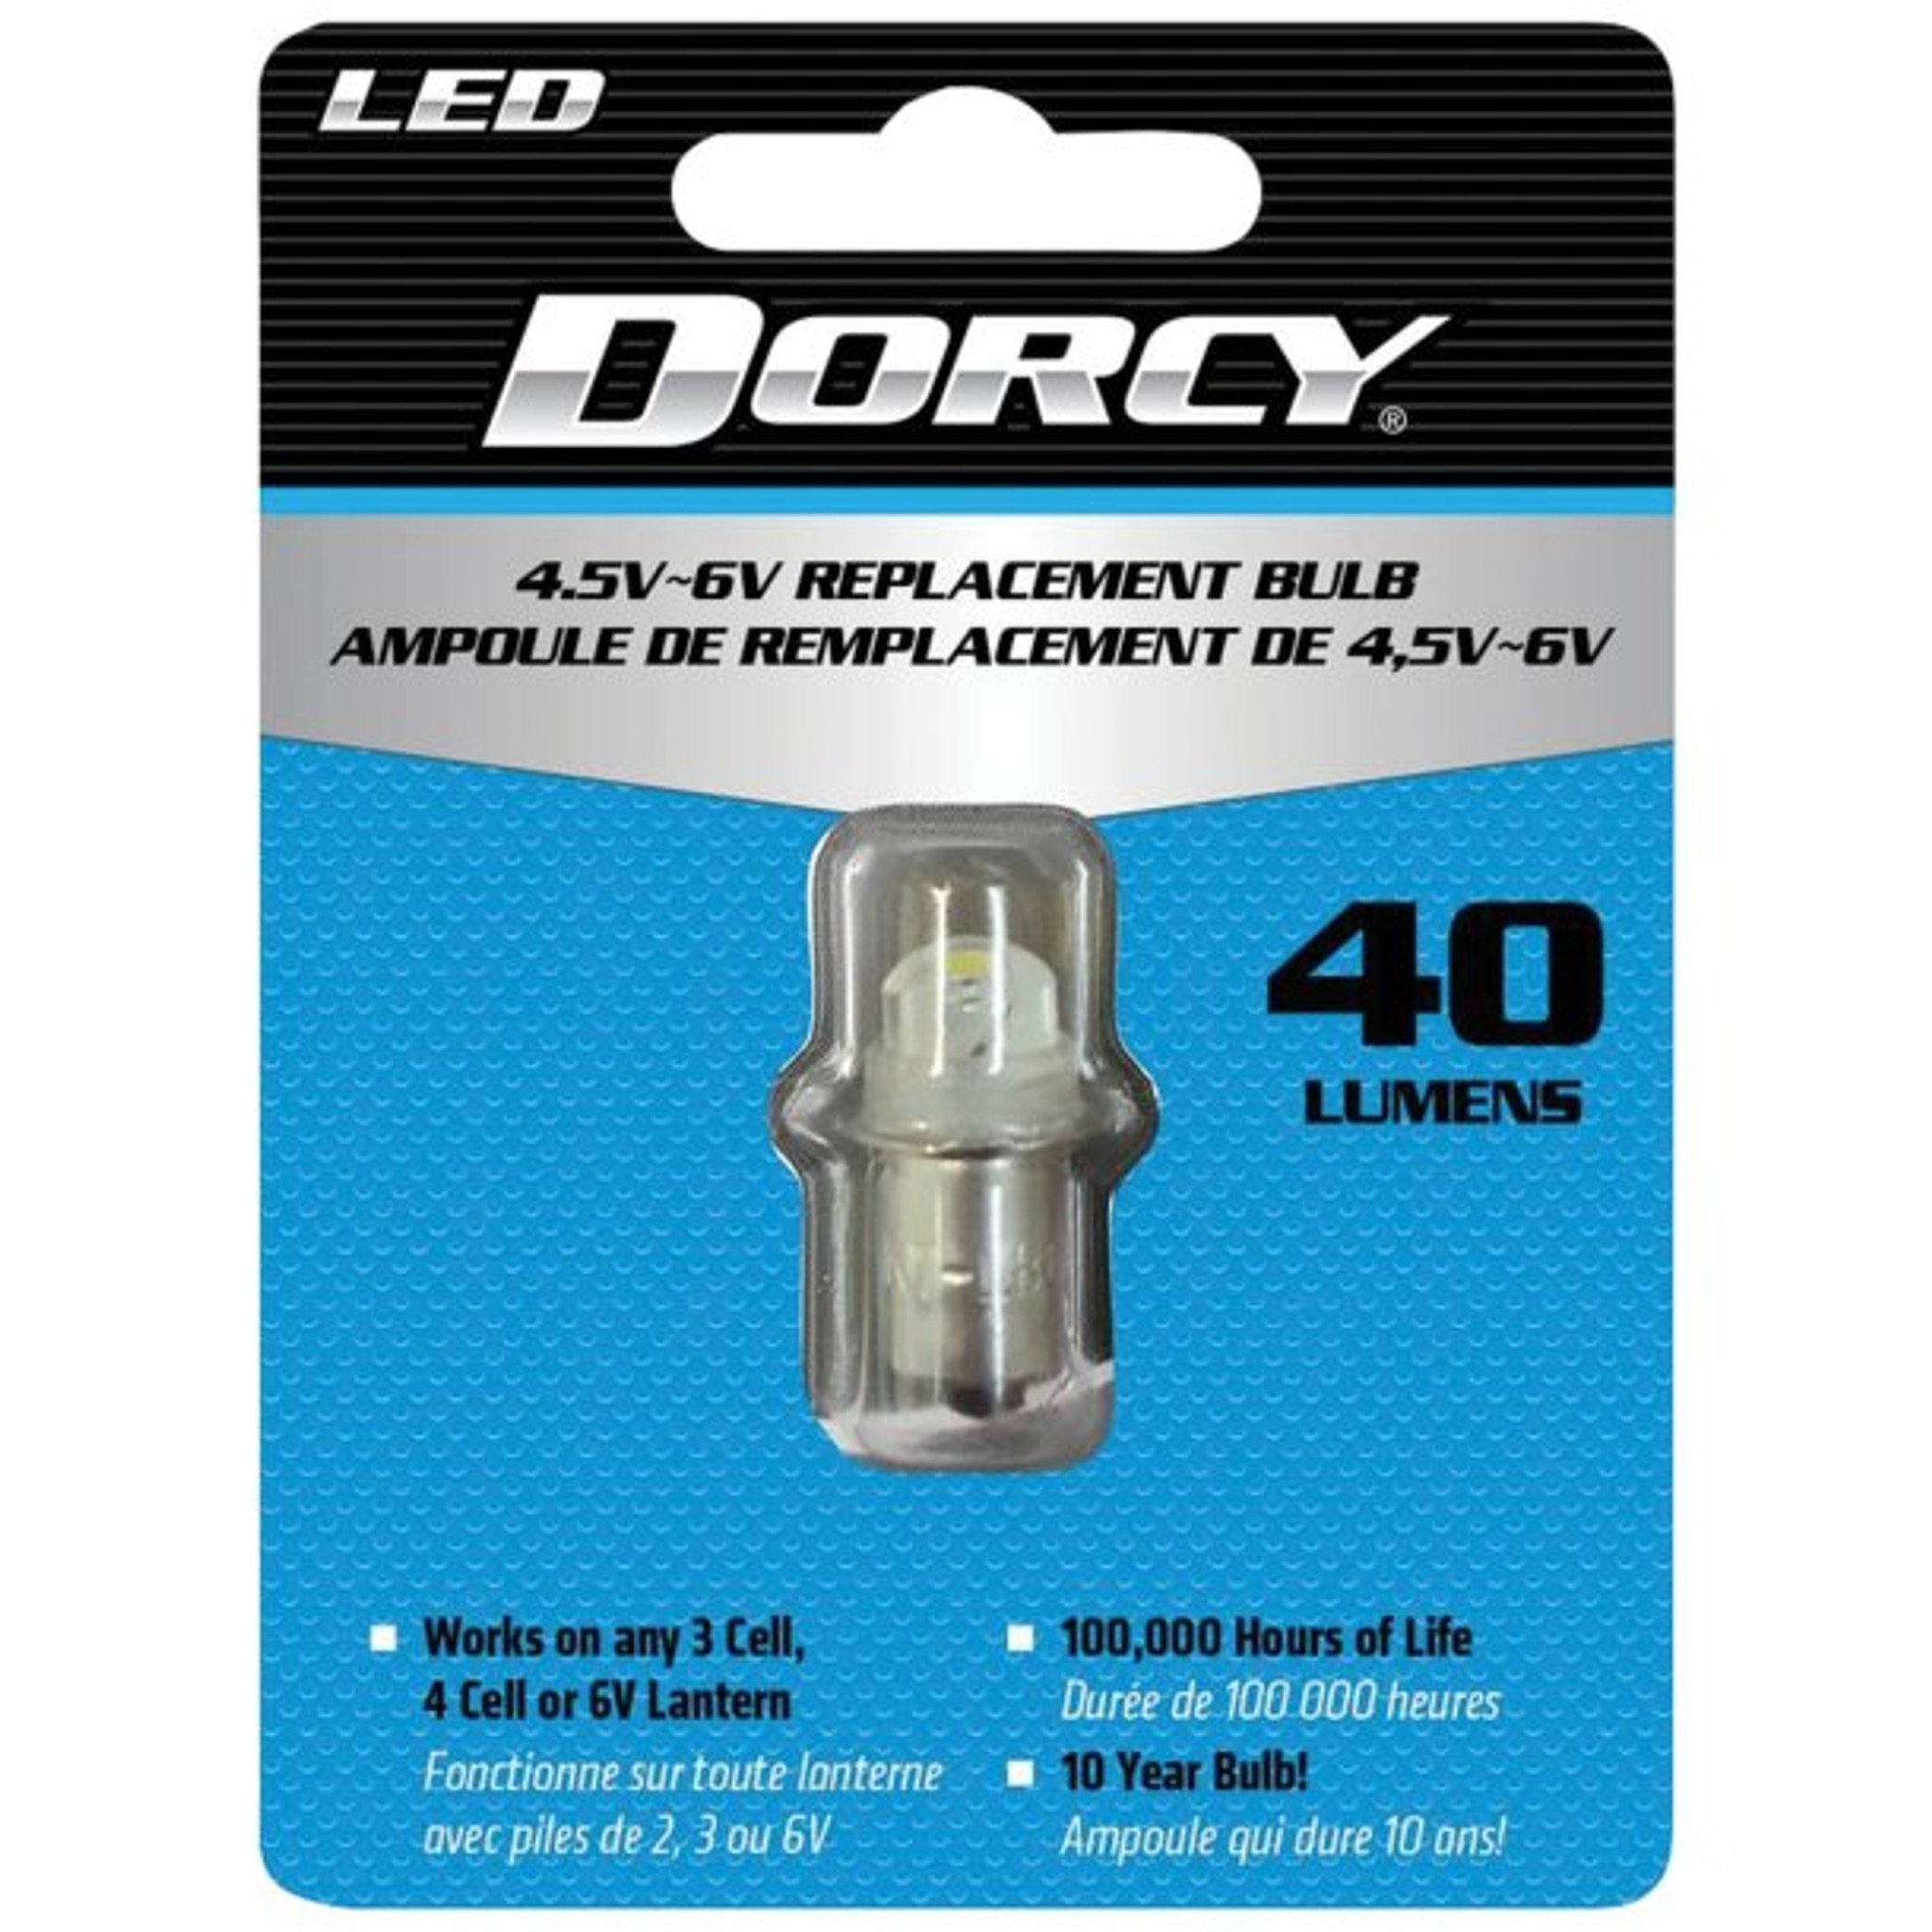 Dorcy 6V Floating LED Lantern